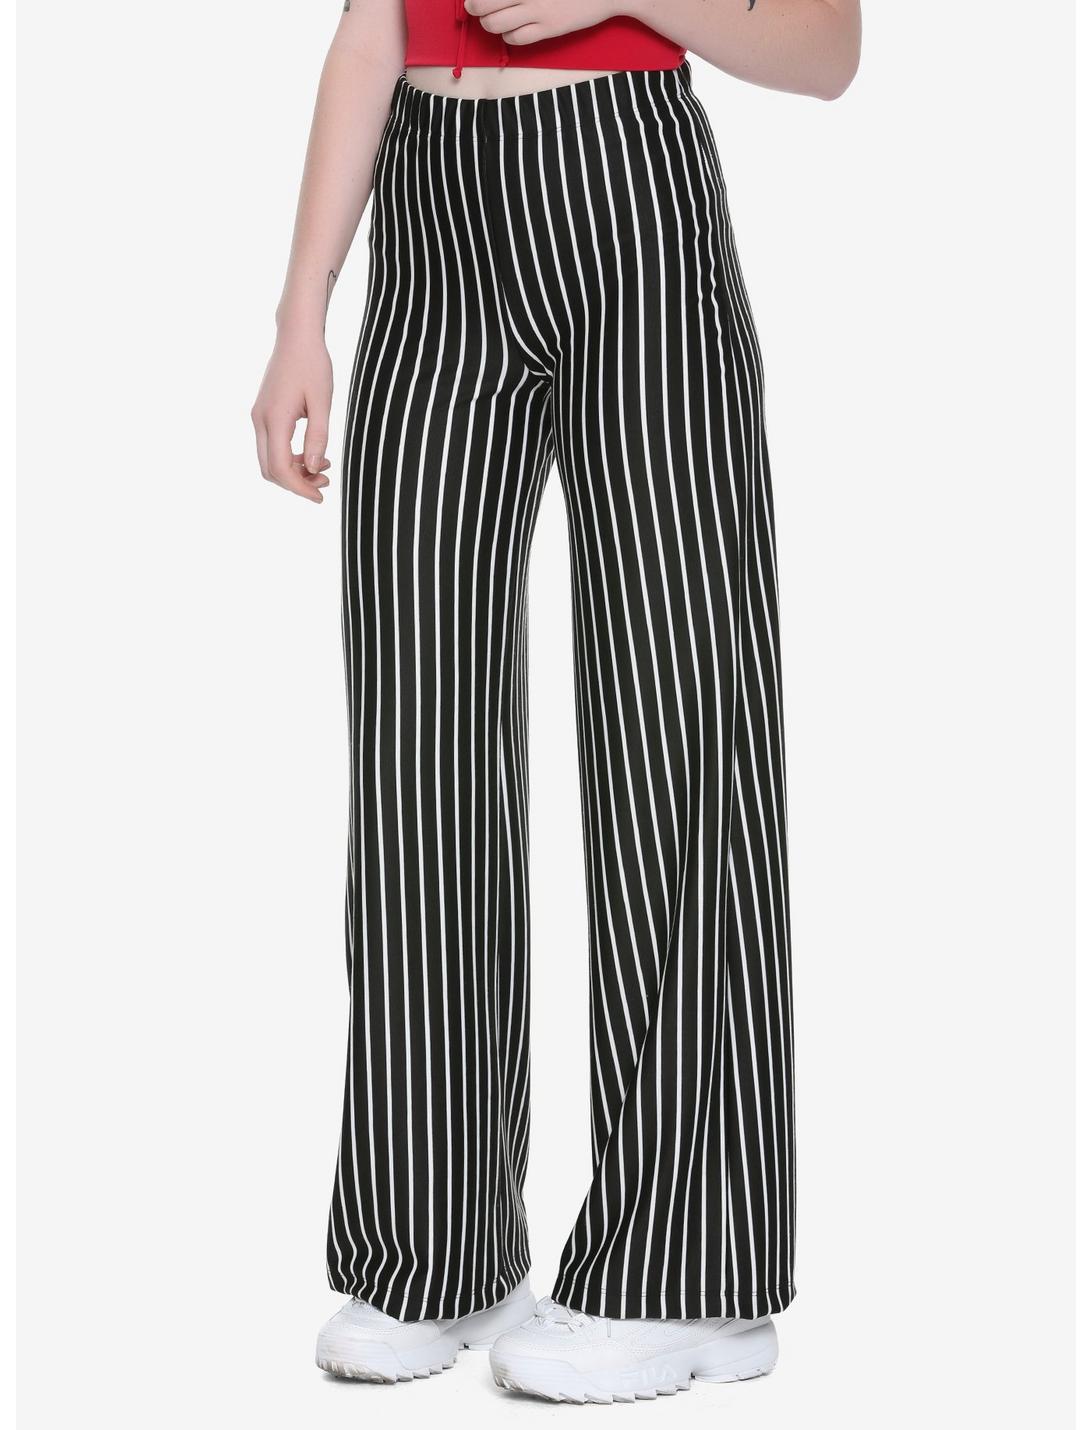 Black & White Striped Girls Pants, BLACK, hi-res